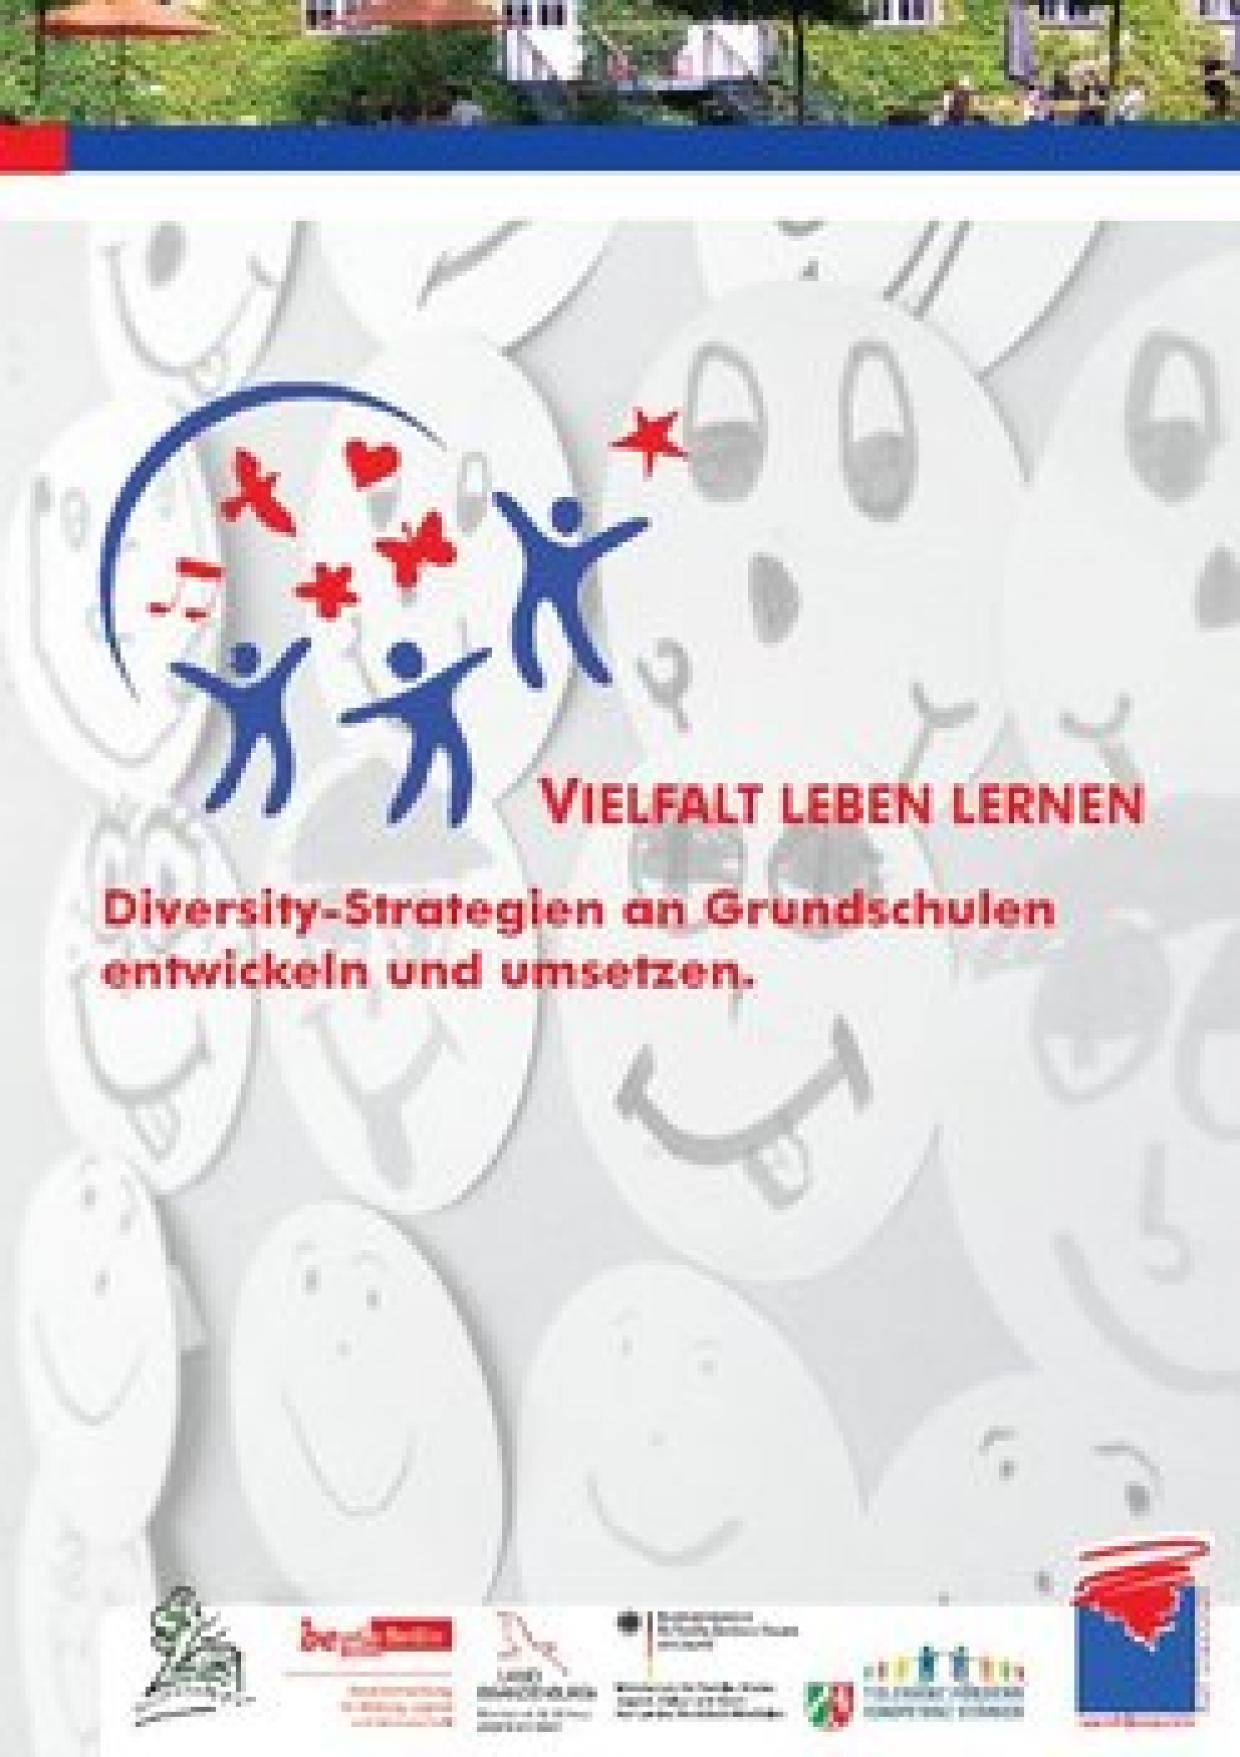 Projektdokumentation „Vielfalt leben lernen“